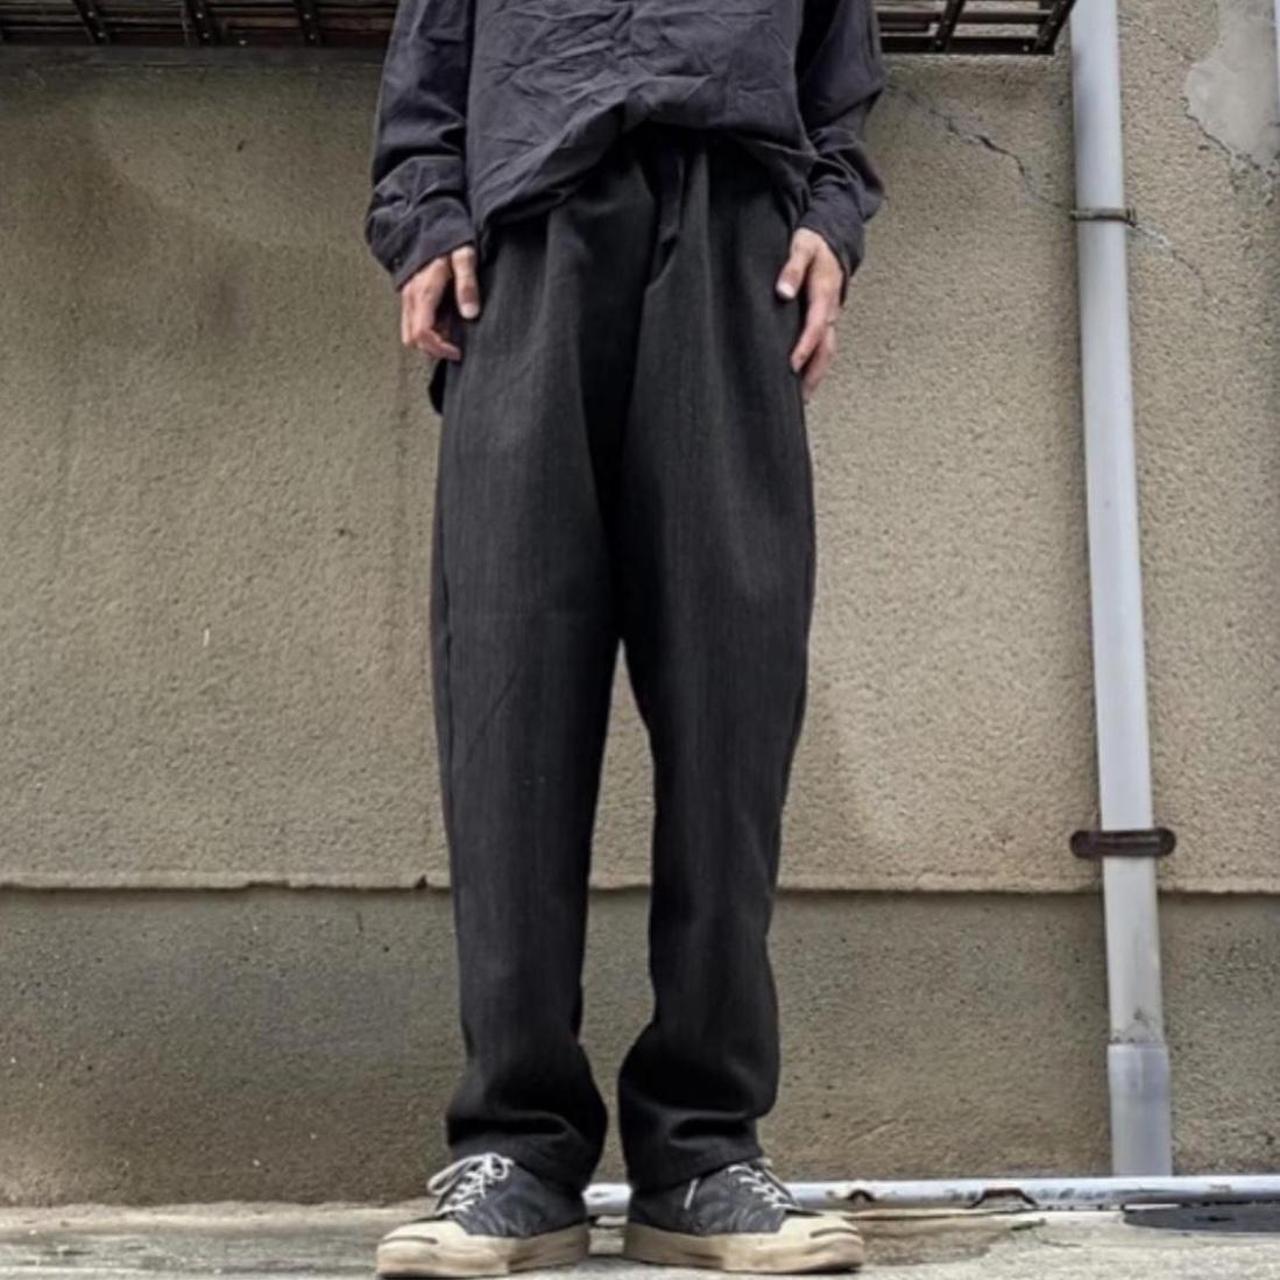 ️DM B4 PURCHASING PLS ️ vintage Japanese pants made... - Depop